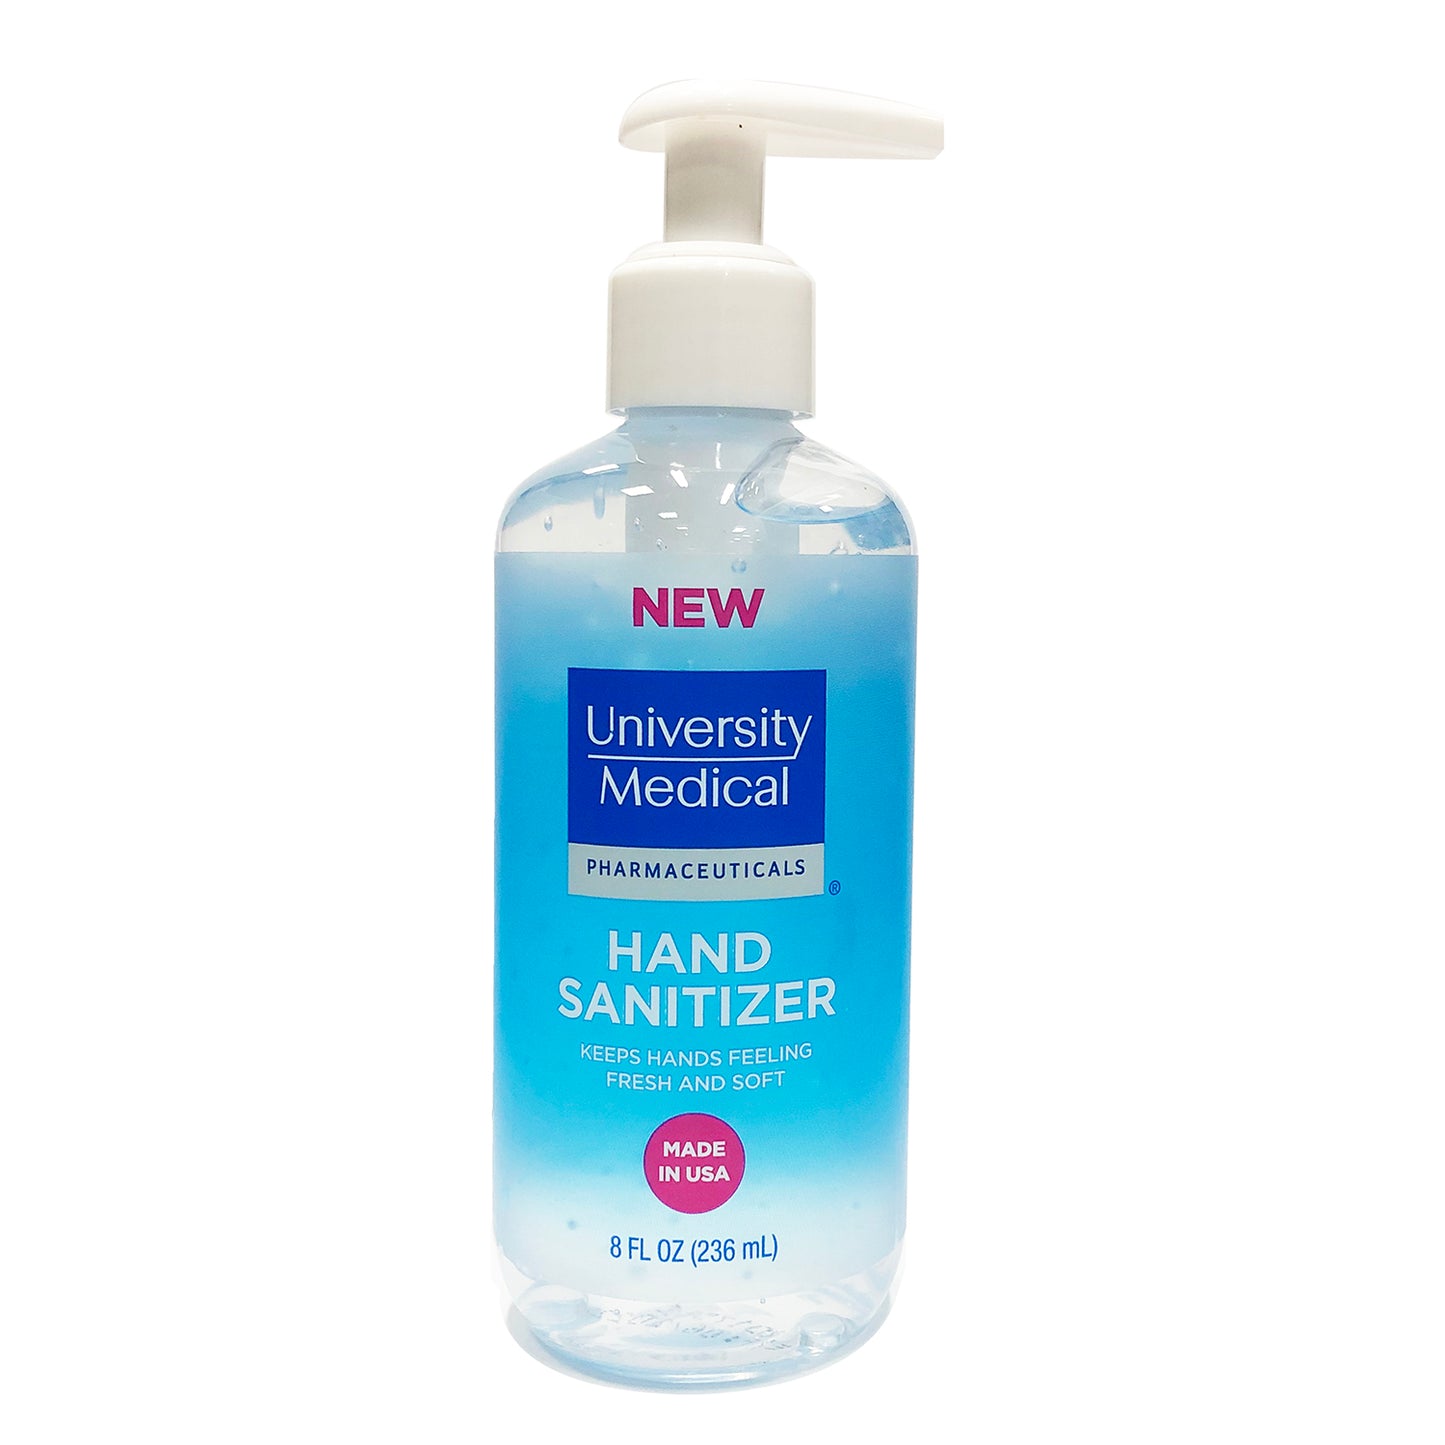 University Medical 8 oz Hand Sanitizer *Made in USA*